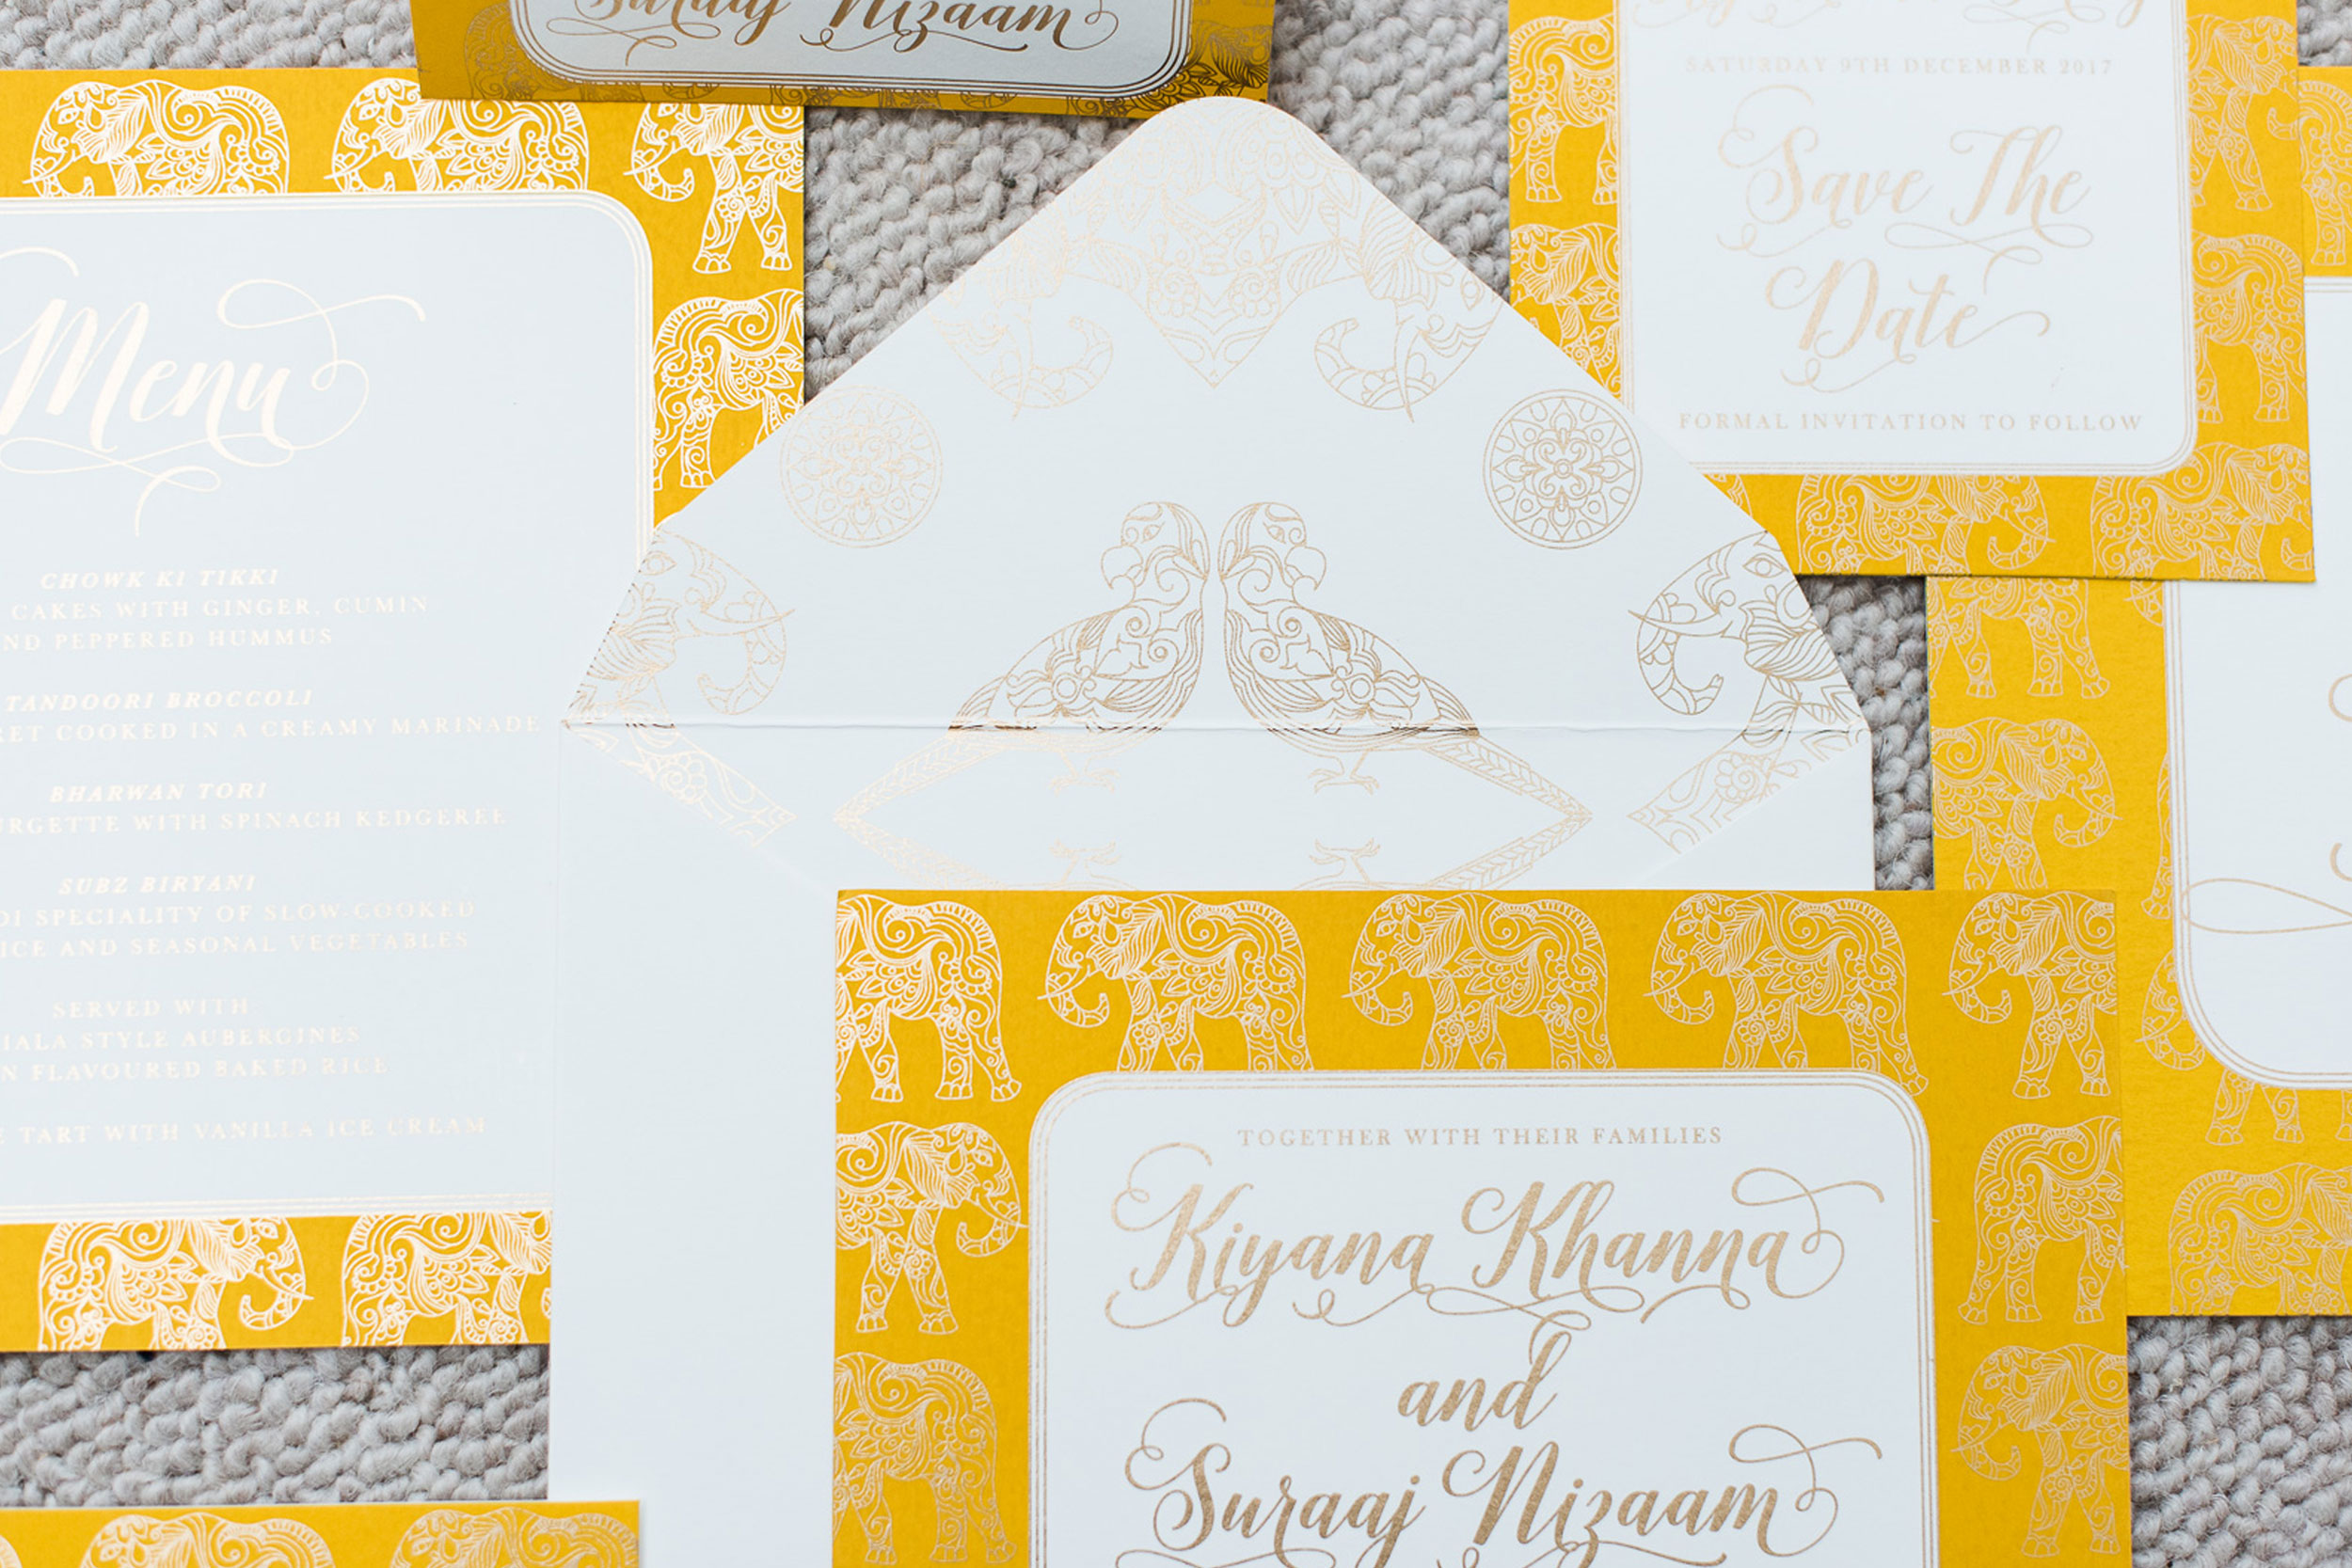 trio-of-life-gold-elephant-envelope-wedding-invitation.jpg